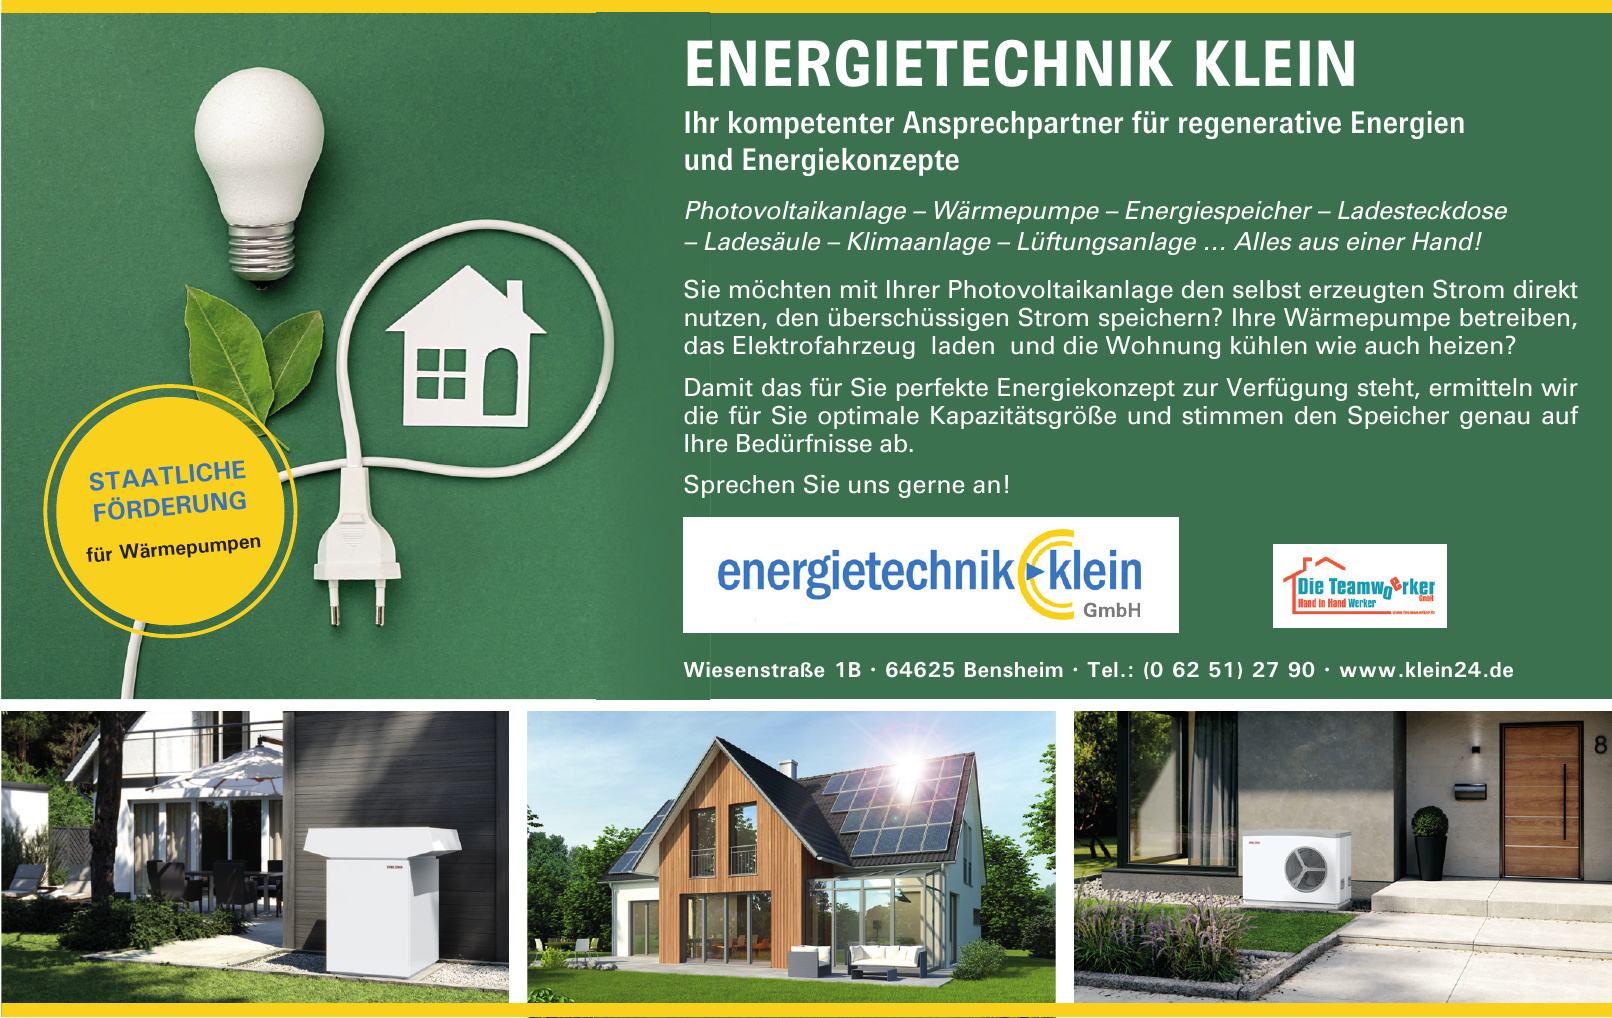 energietechnik klein GmbH